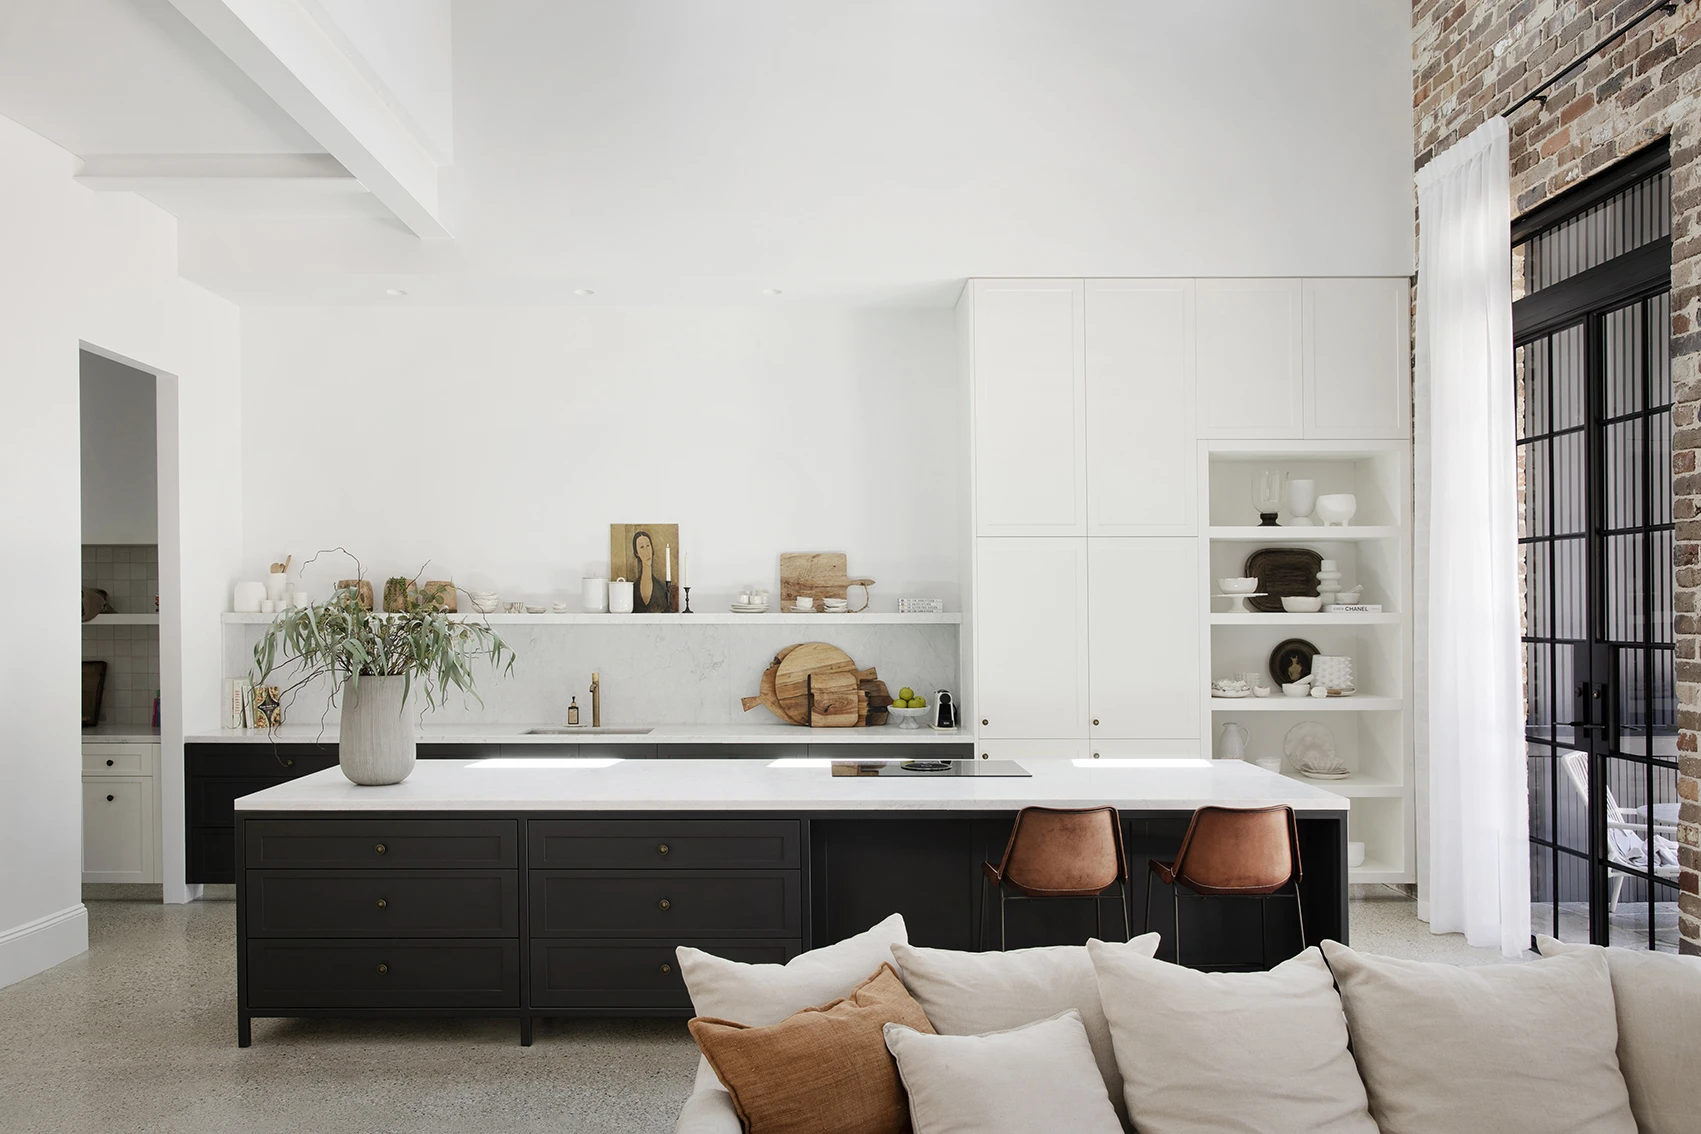 White kitchen with black island bench